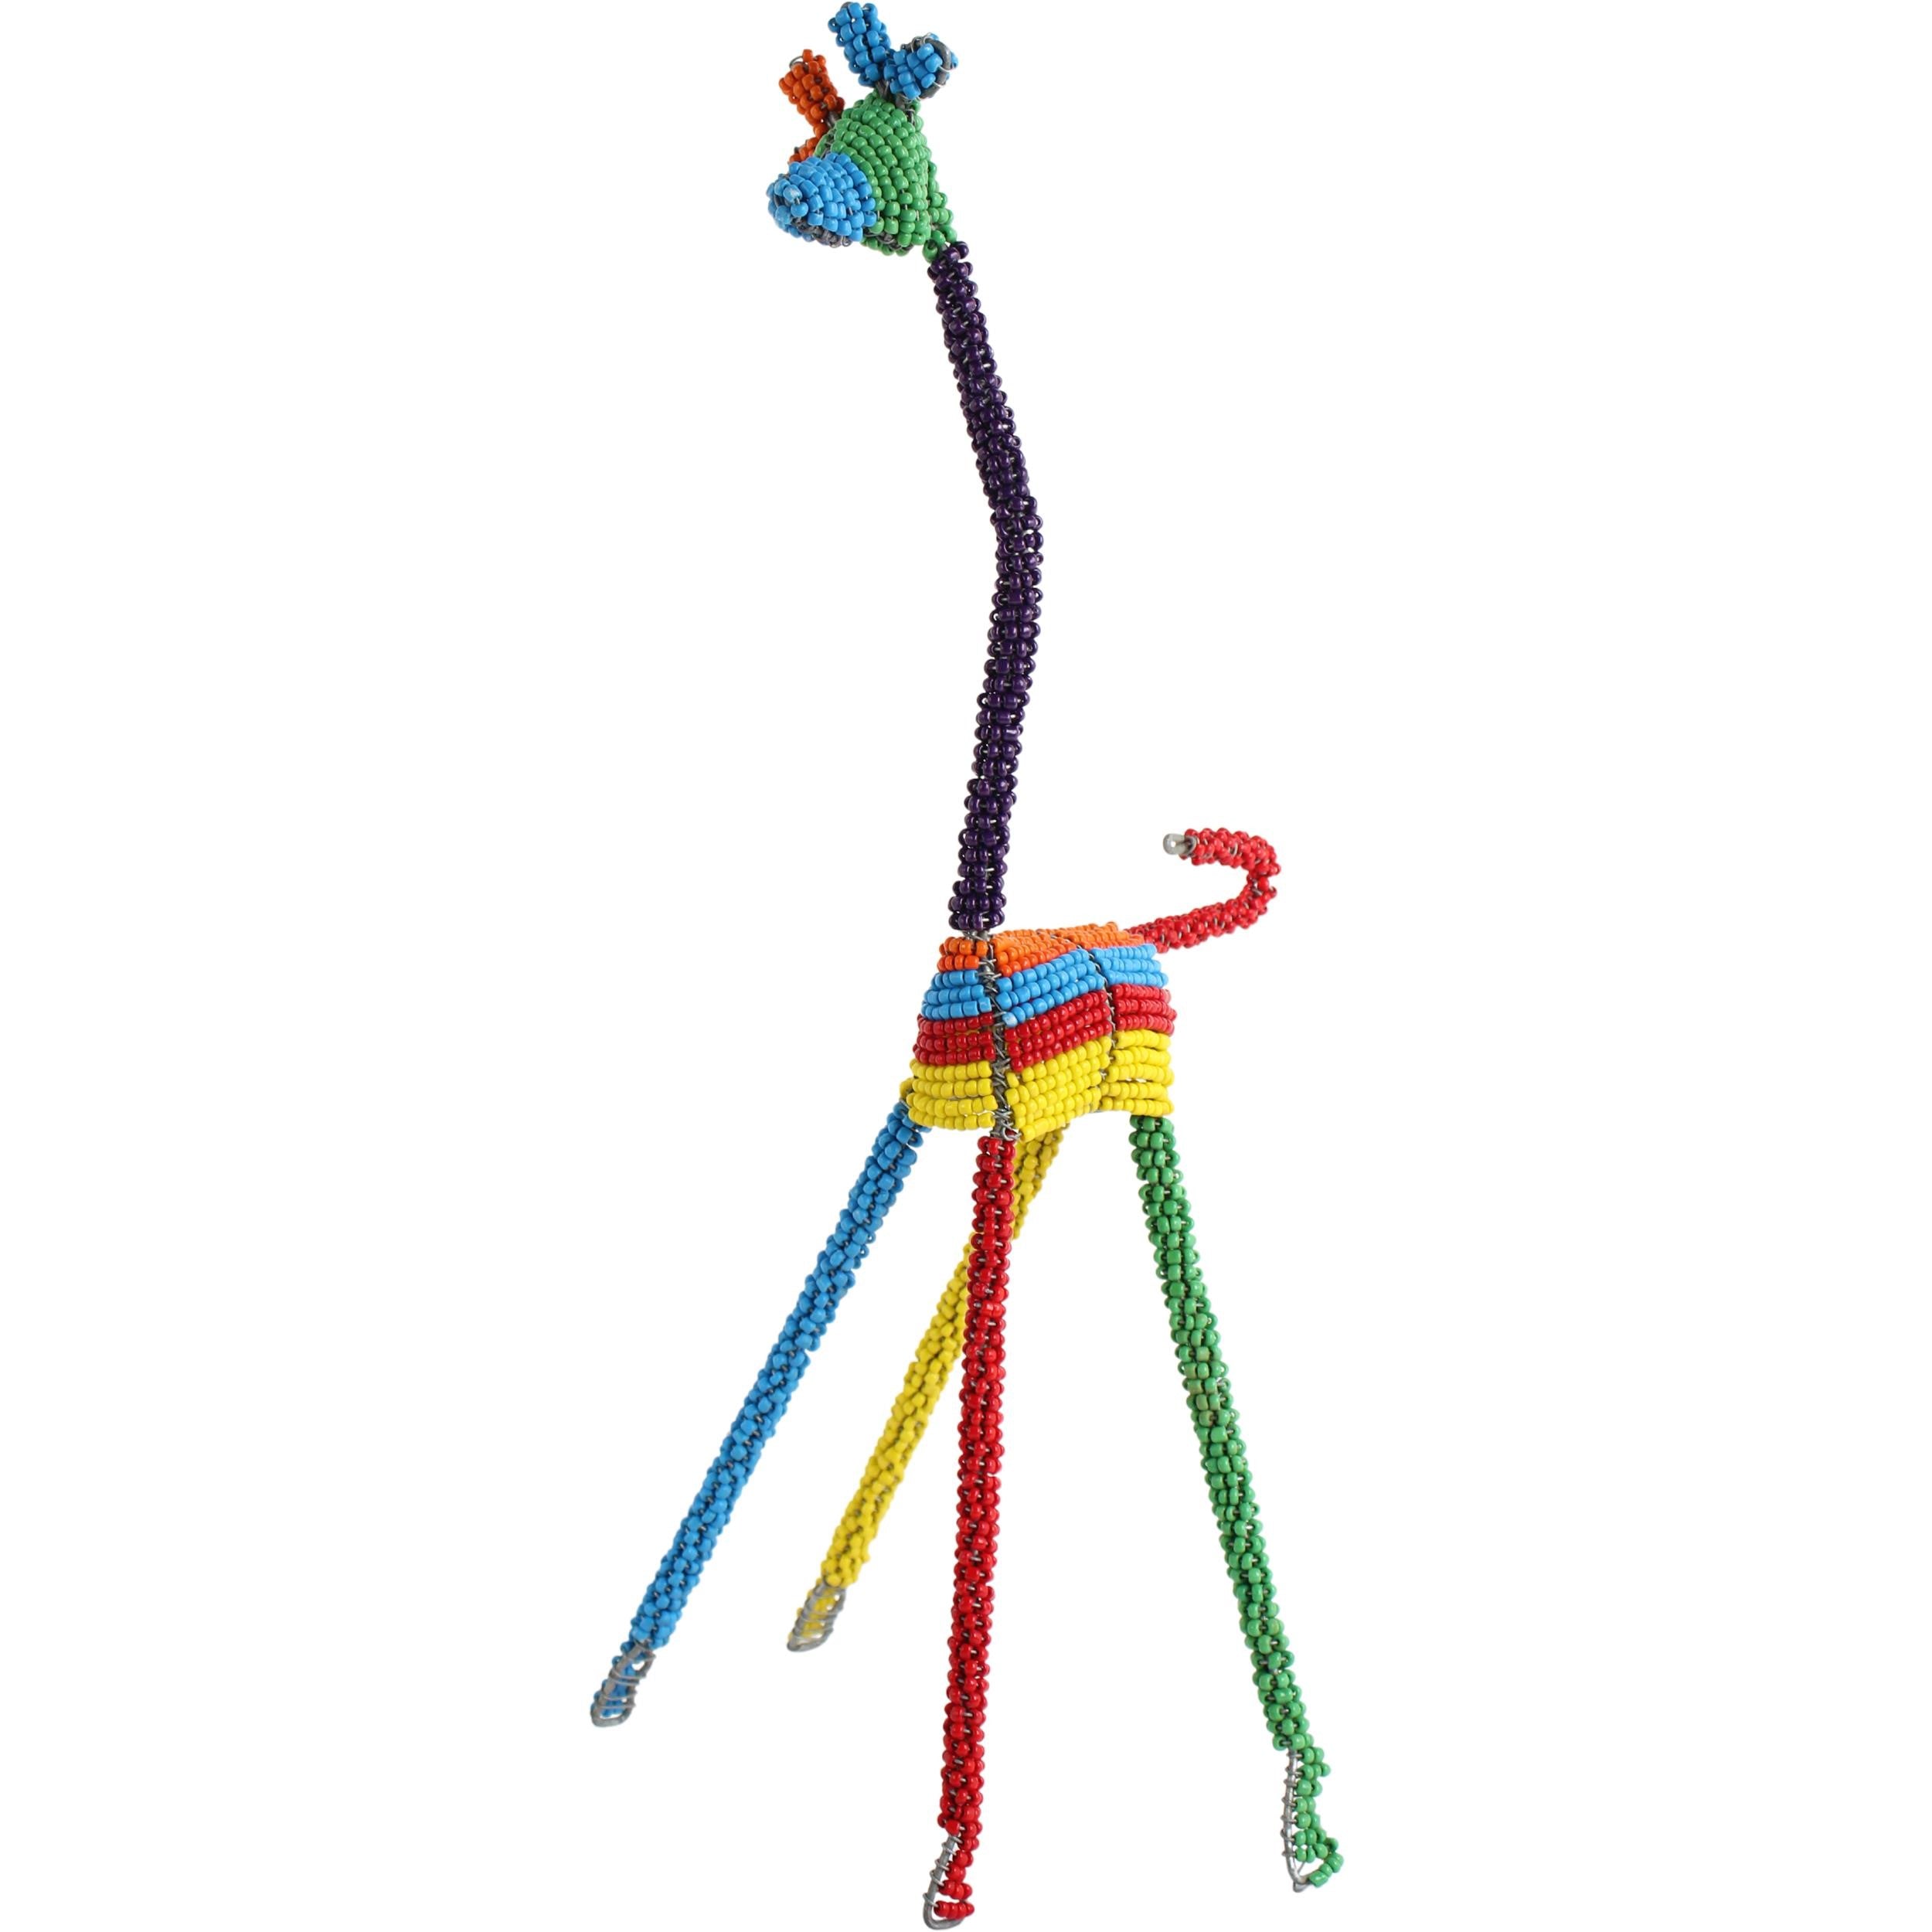 Shona Tribe Wire and Beaded Animals - Giraffe ~19.7" Tall